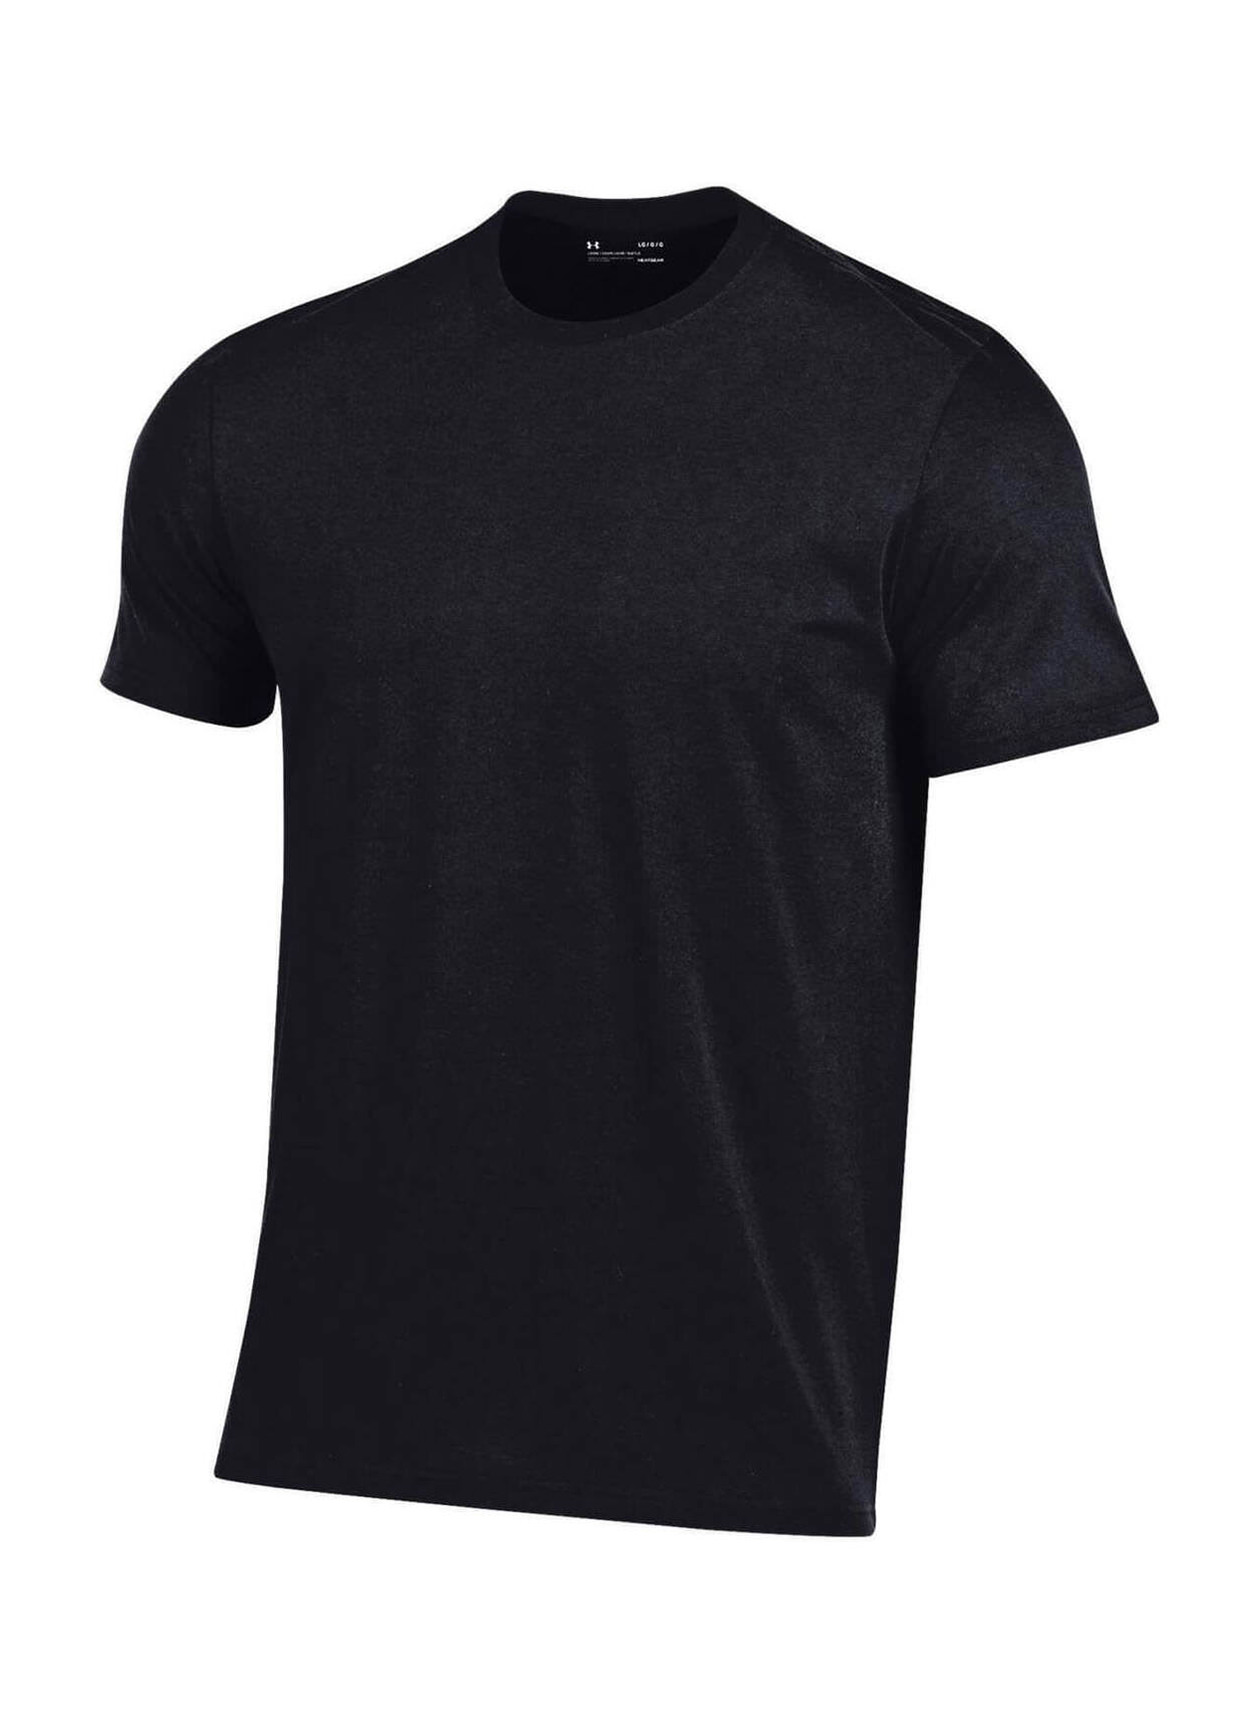 Custom T-shirts  Screen Printed Under Armour Men's Black Performance  Cotton T-Shirt